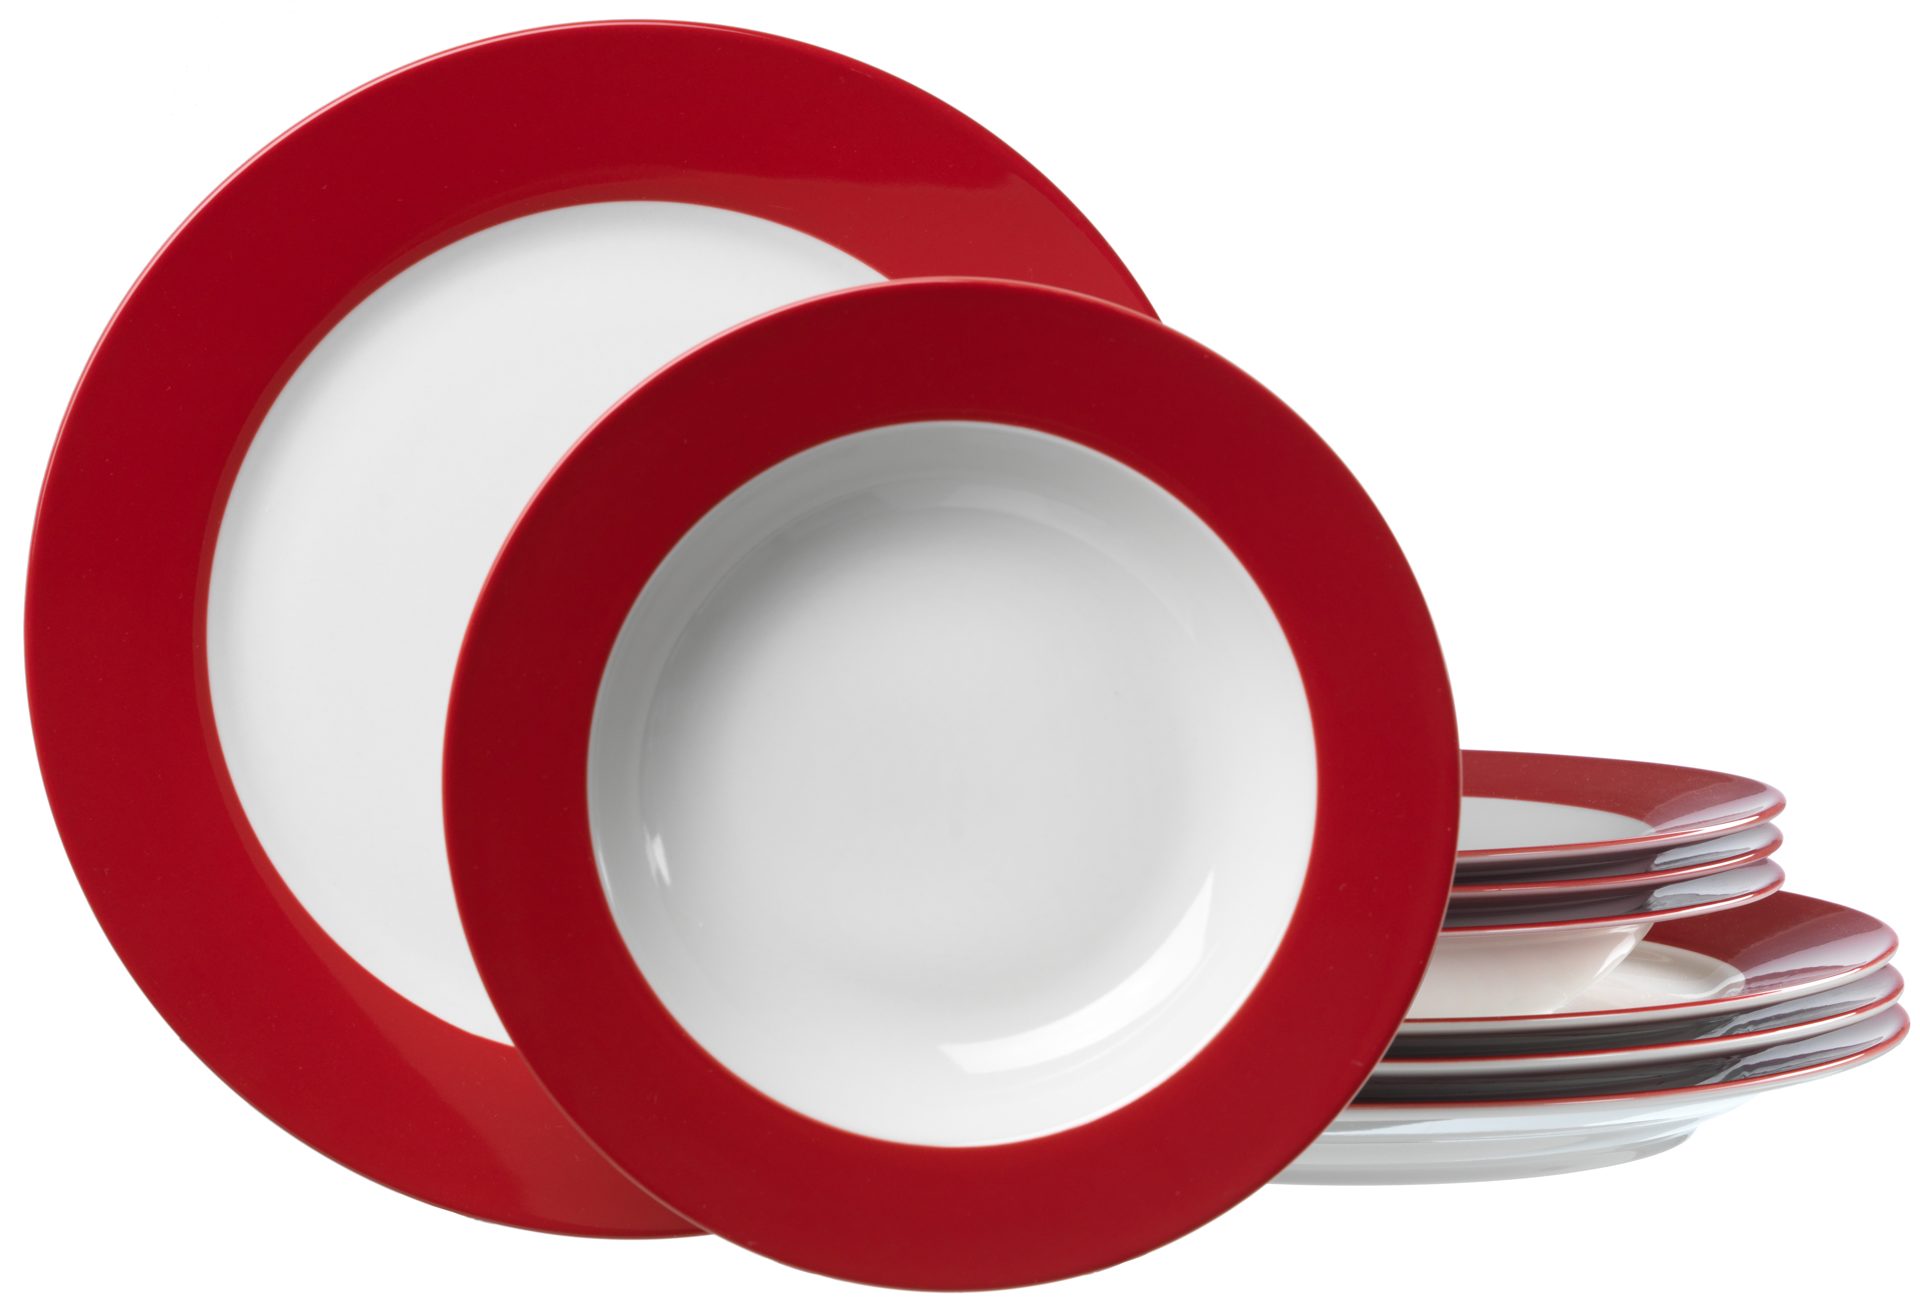 Tafelservice Ritzenhoff & breker aus Porzellan in Rot Tafelservice Doppio weißes Porzellan mit rotem Rand - 8-teilig, Tafelgeschirr